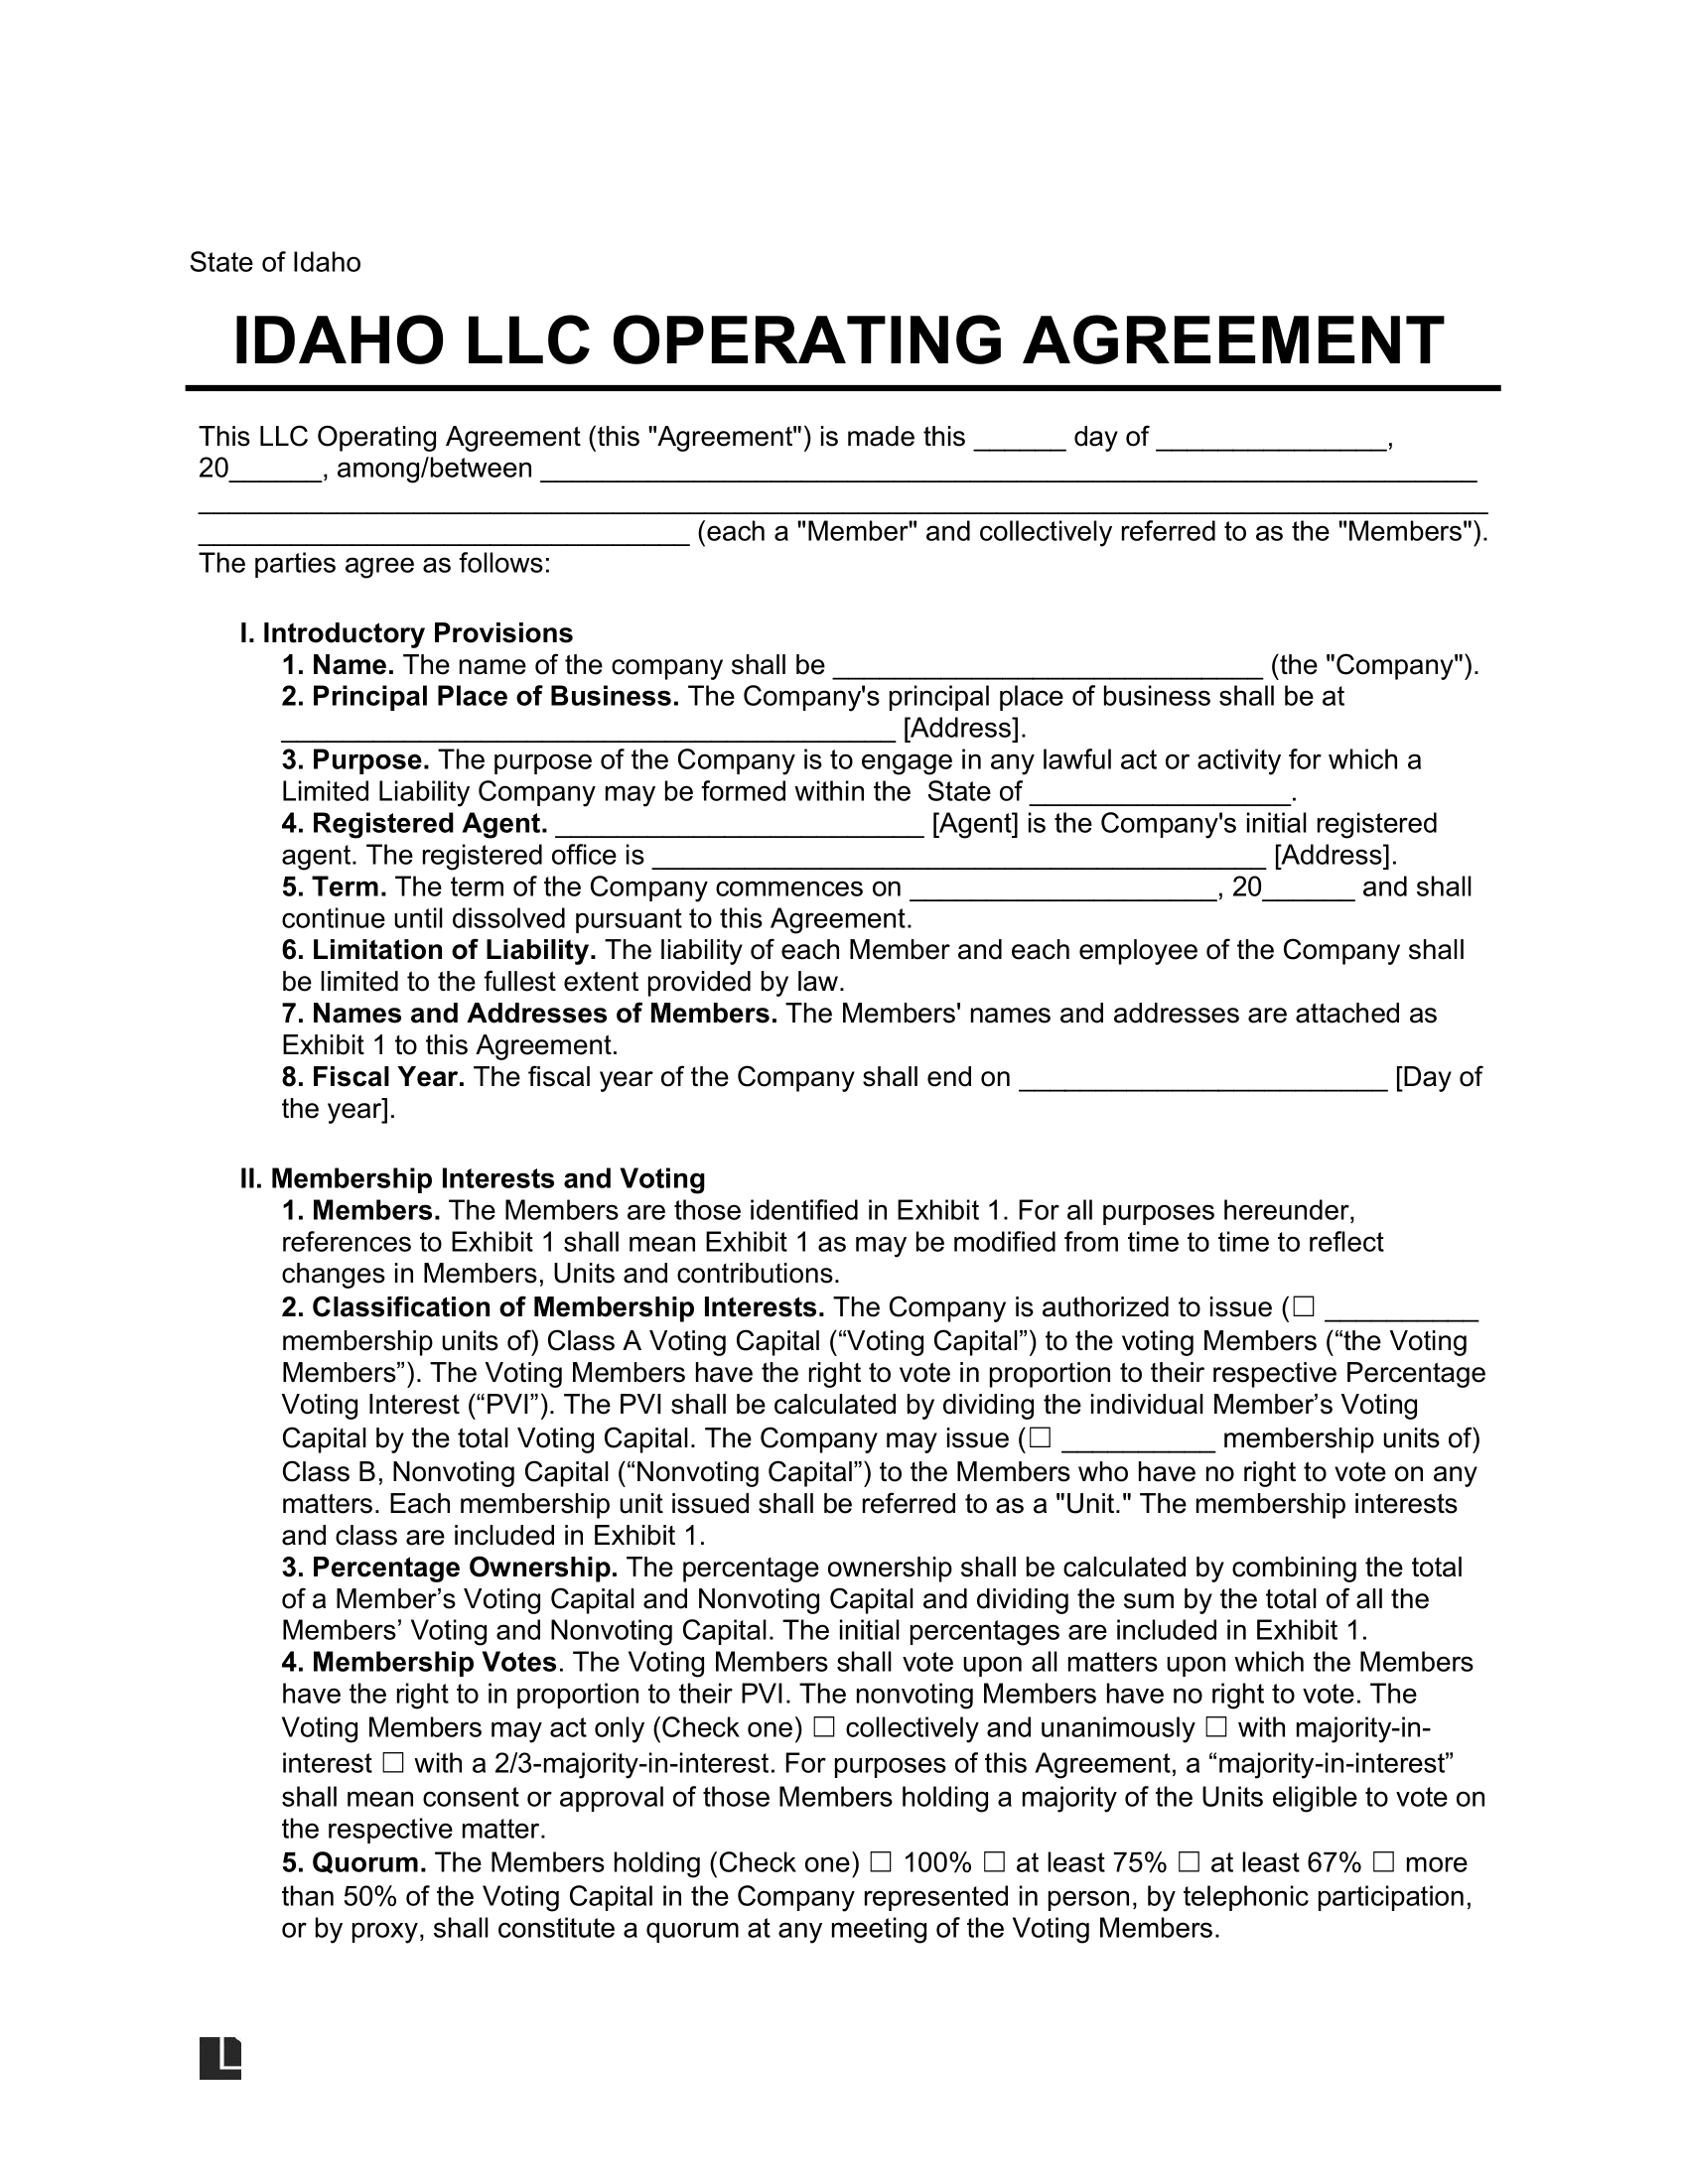 Idaho LLC Operating Agreement Template